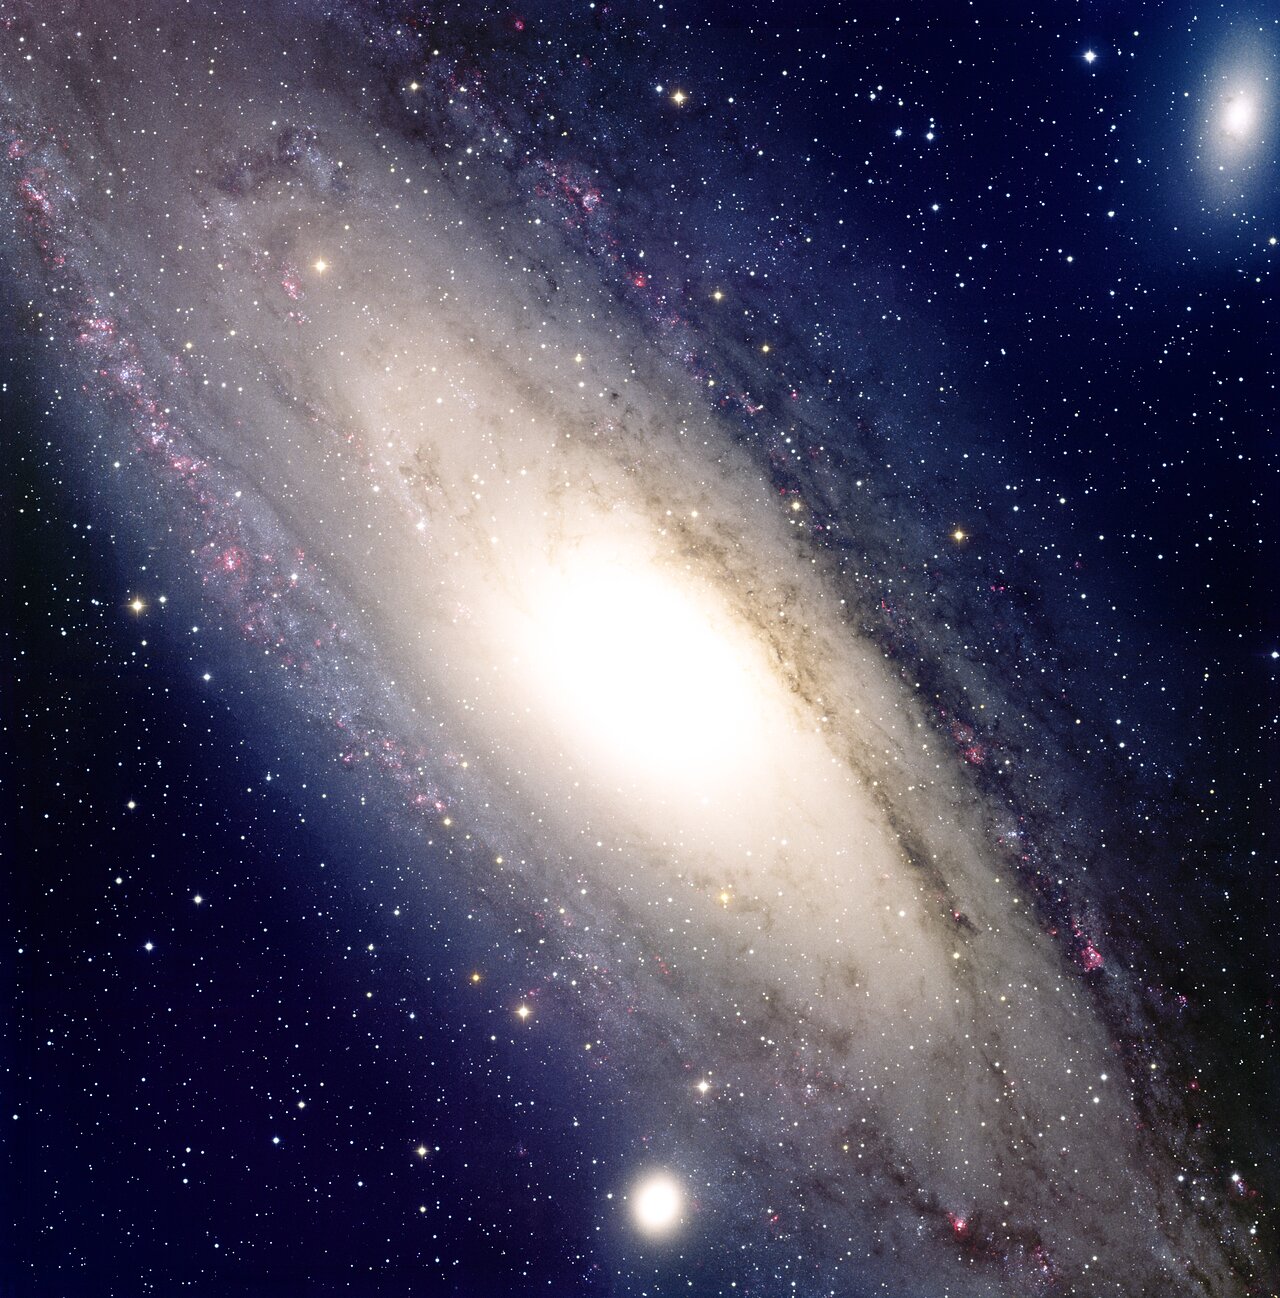 andromeda galaxy from telescope